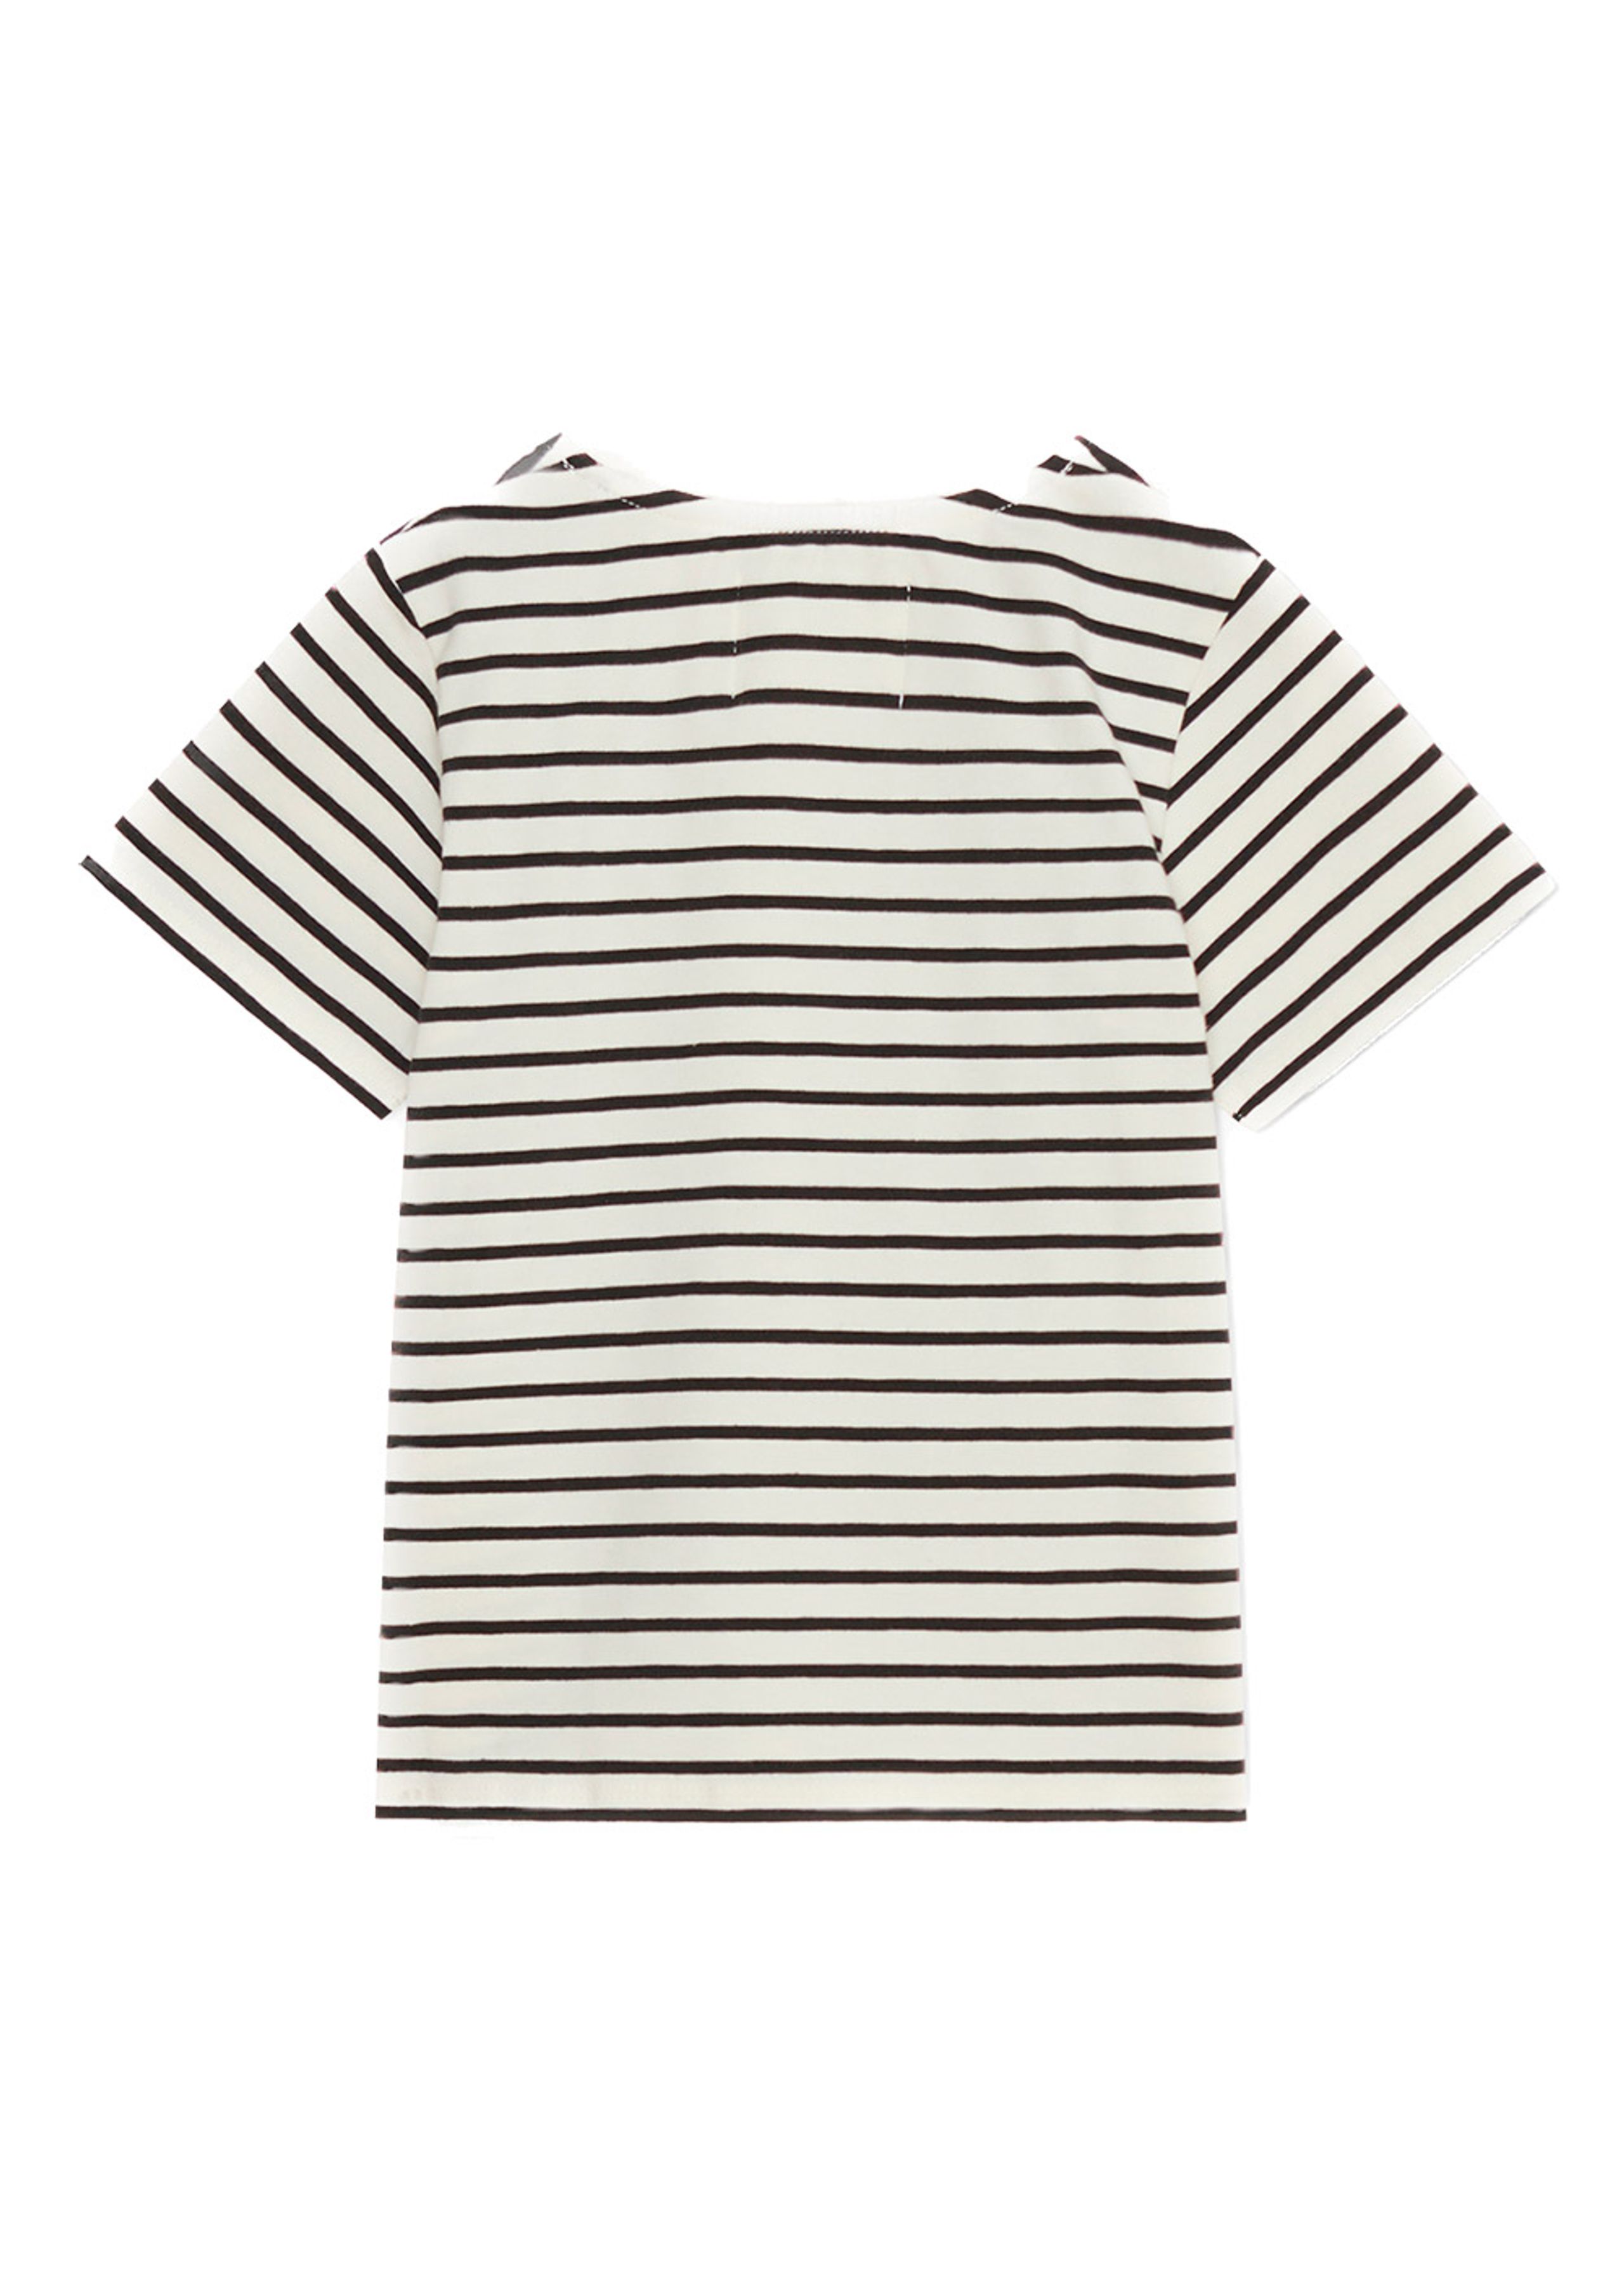 Wood Wood - T-Shirt - Ace IVY T-shirt - Off White/ Black Stripes